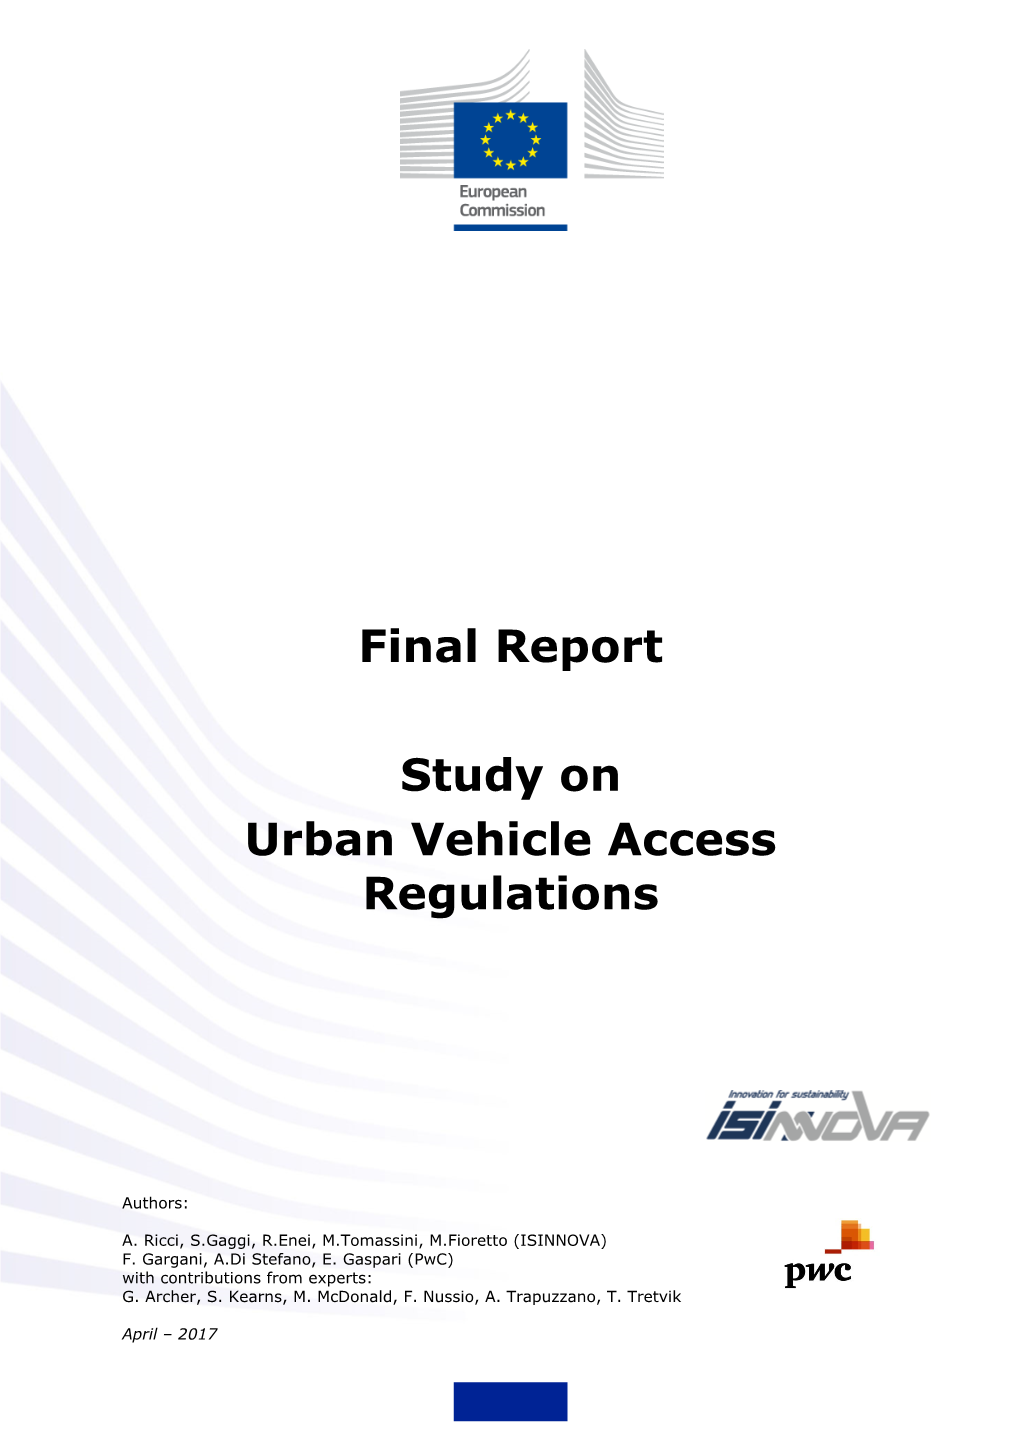 Final Report Study on Urban Vehicle Access Regulations